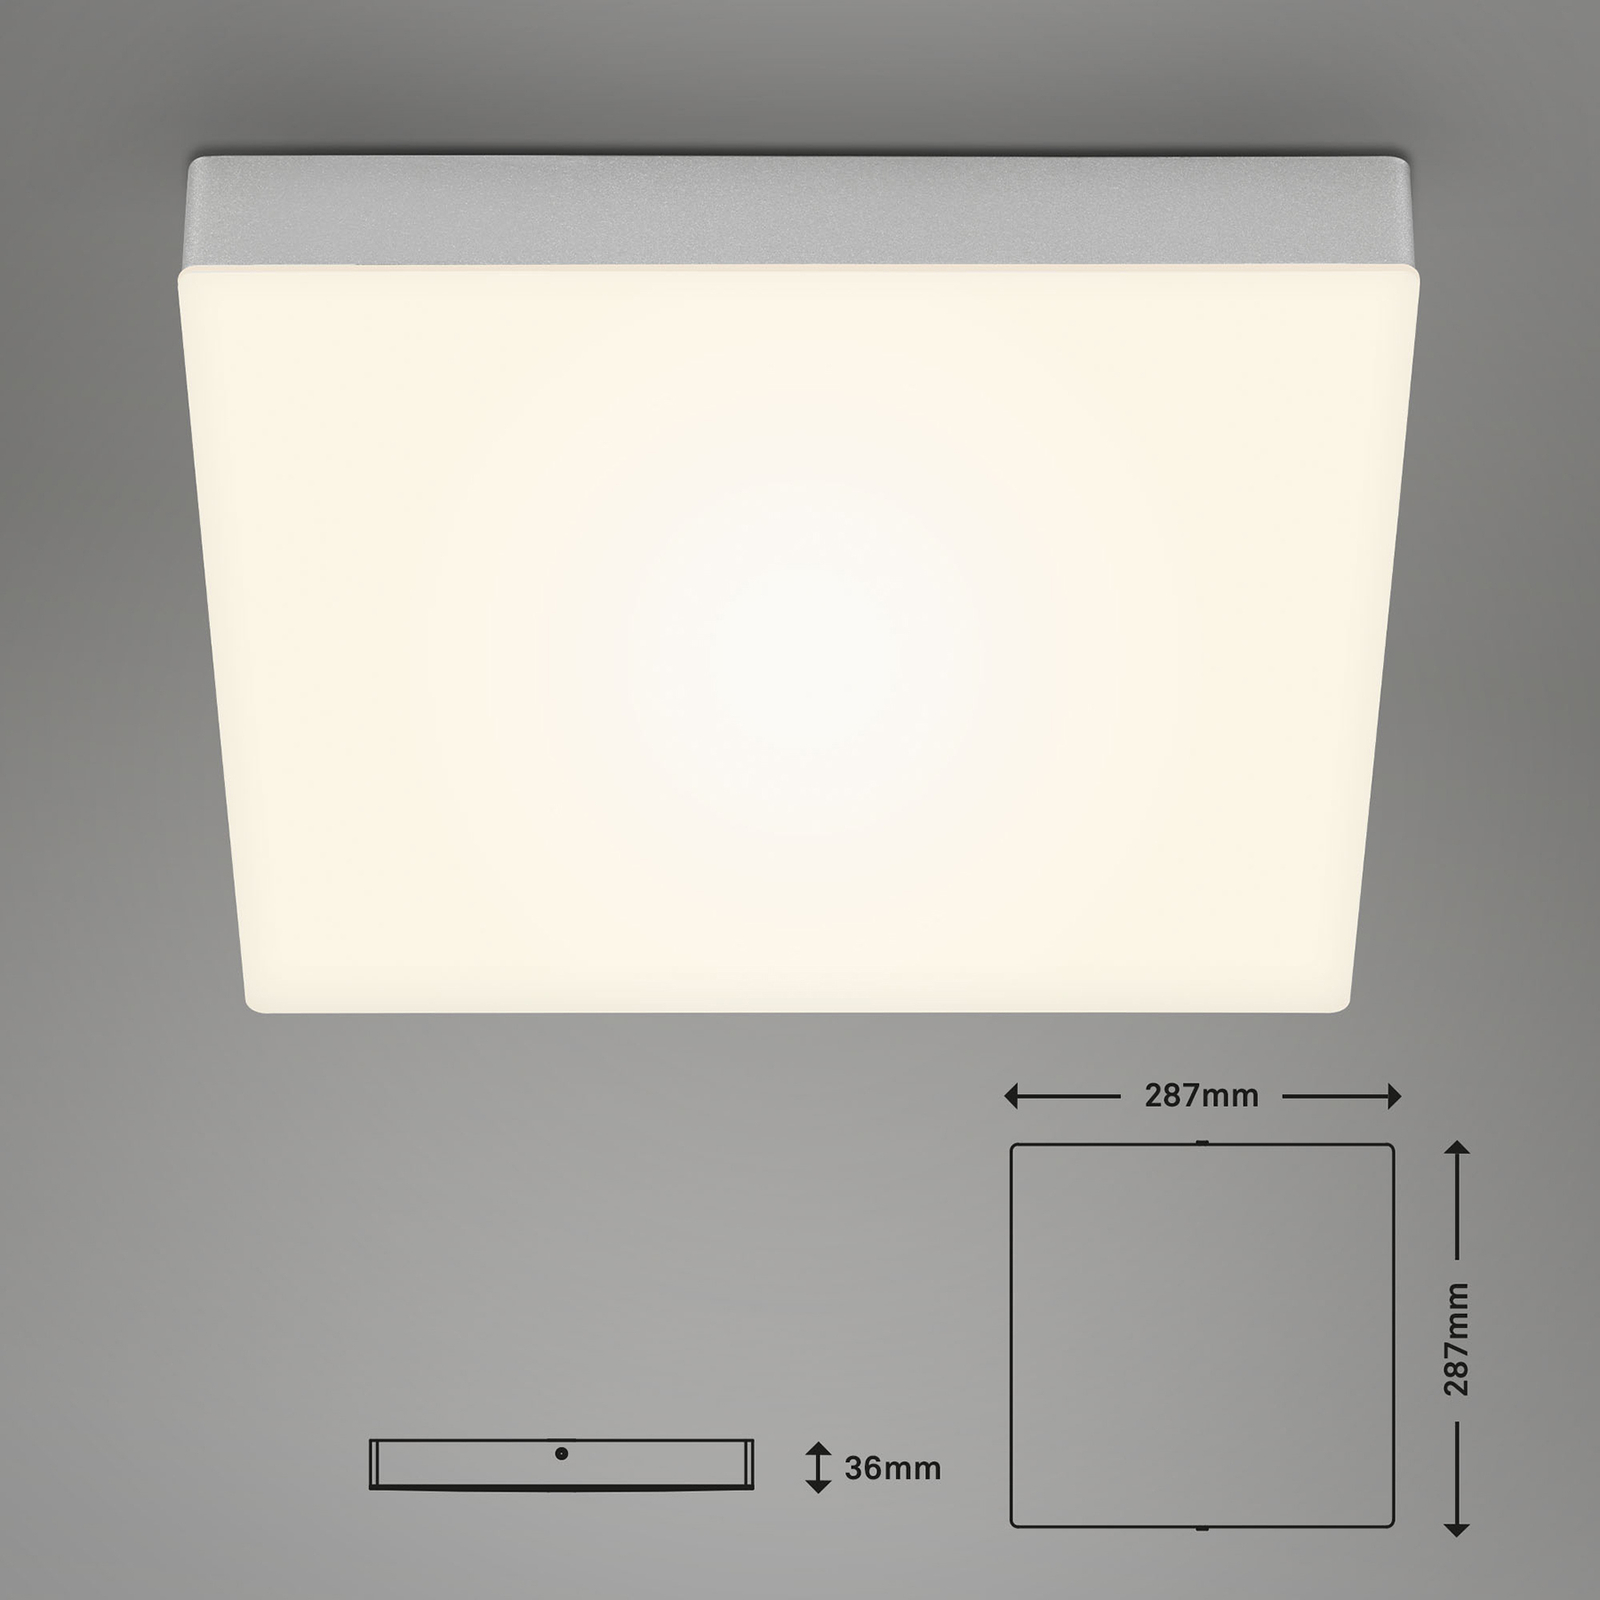 LED-Deckenlampe Flame, 3000K, 28,7x28,7cm, silber